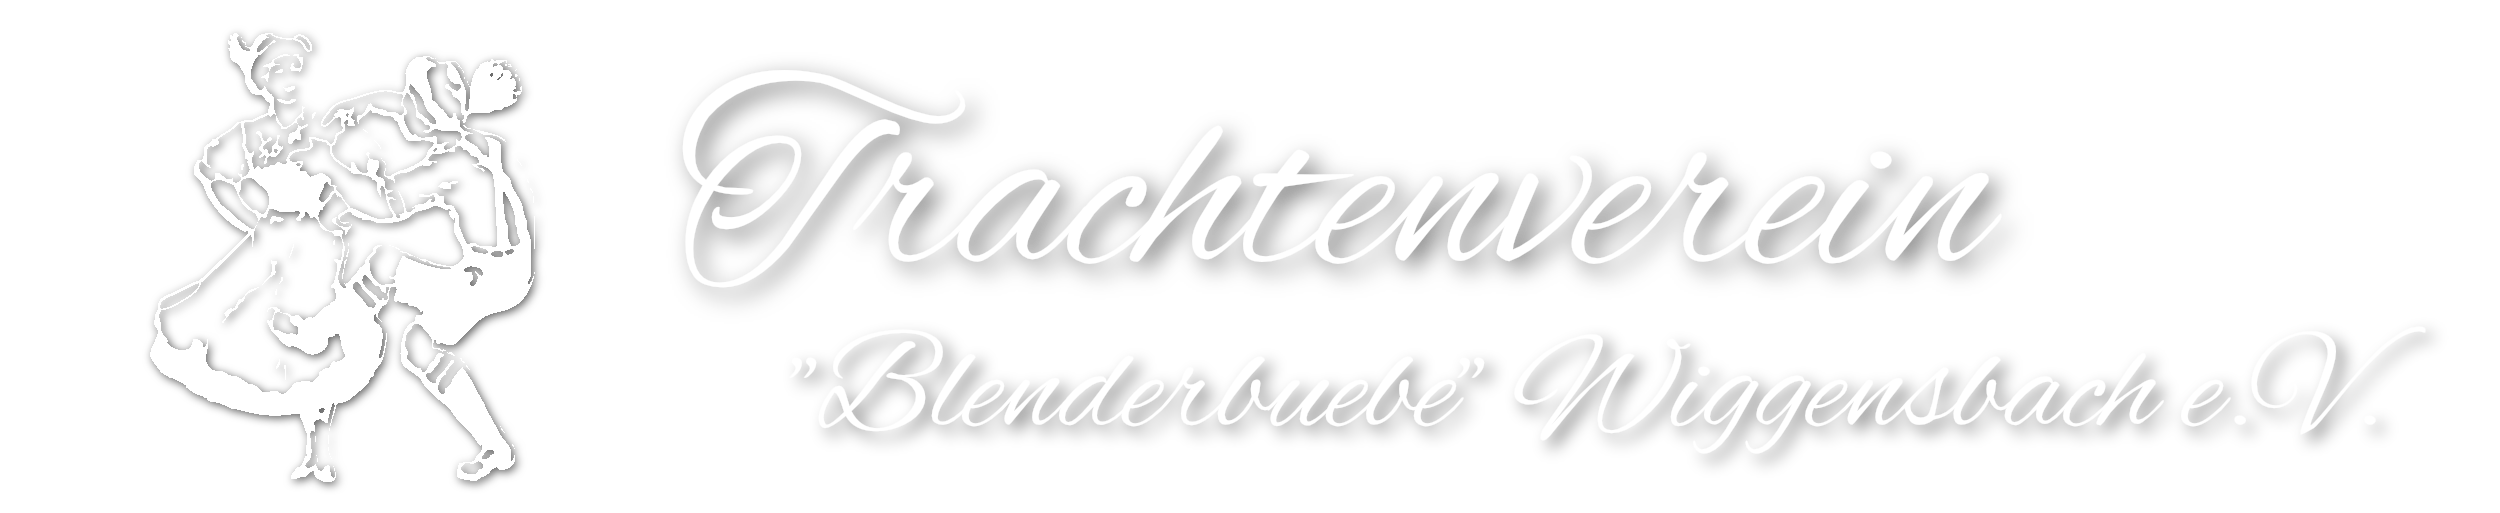 Trachtenverein "Blenderbuebe" Wiggensbach e.V.